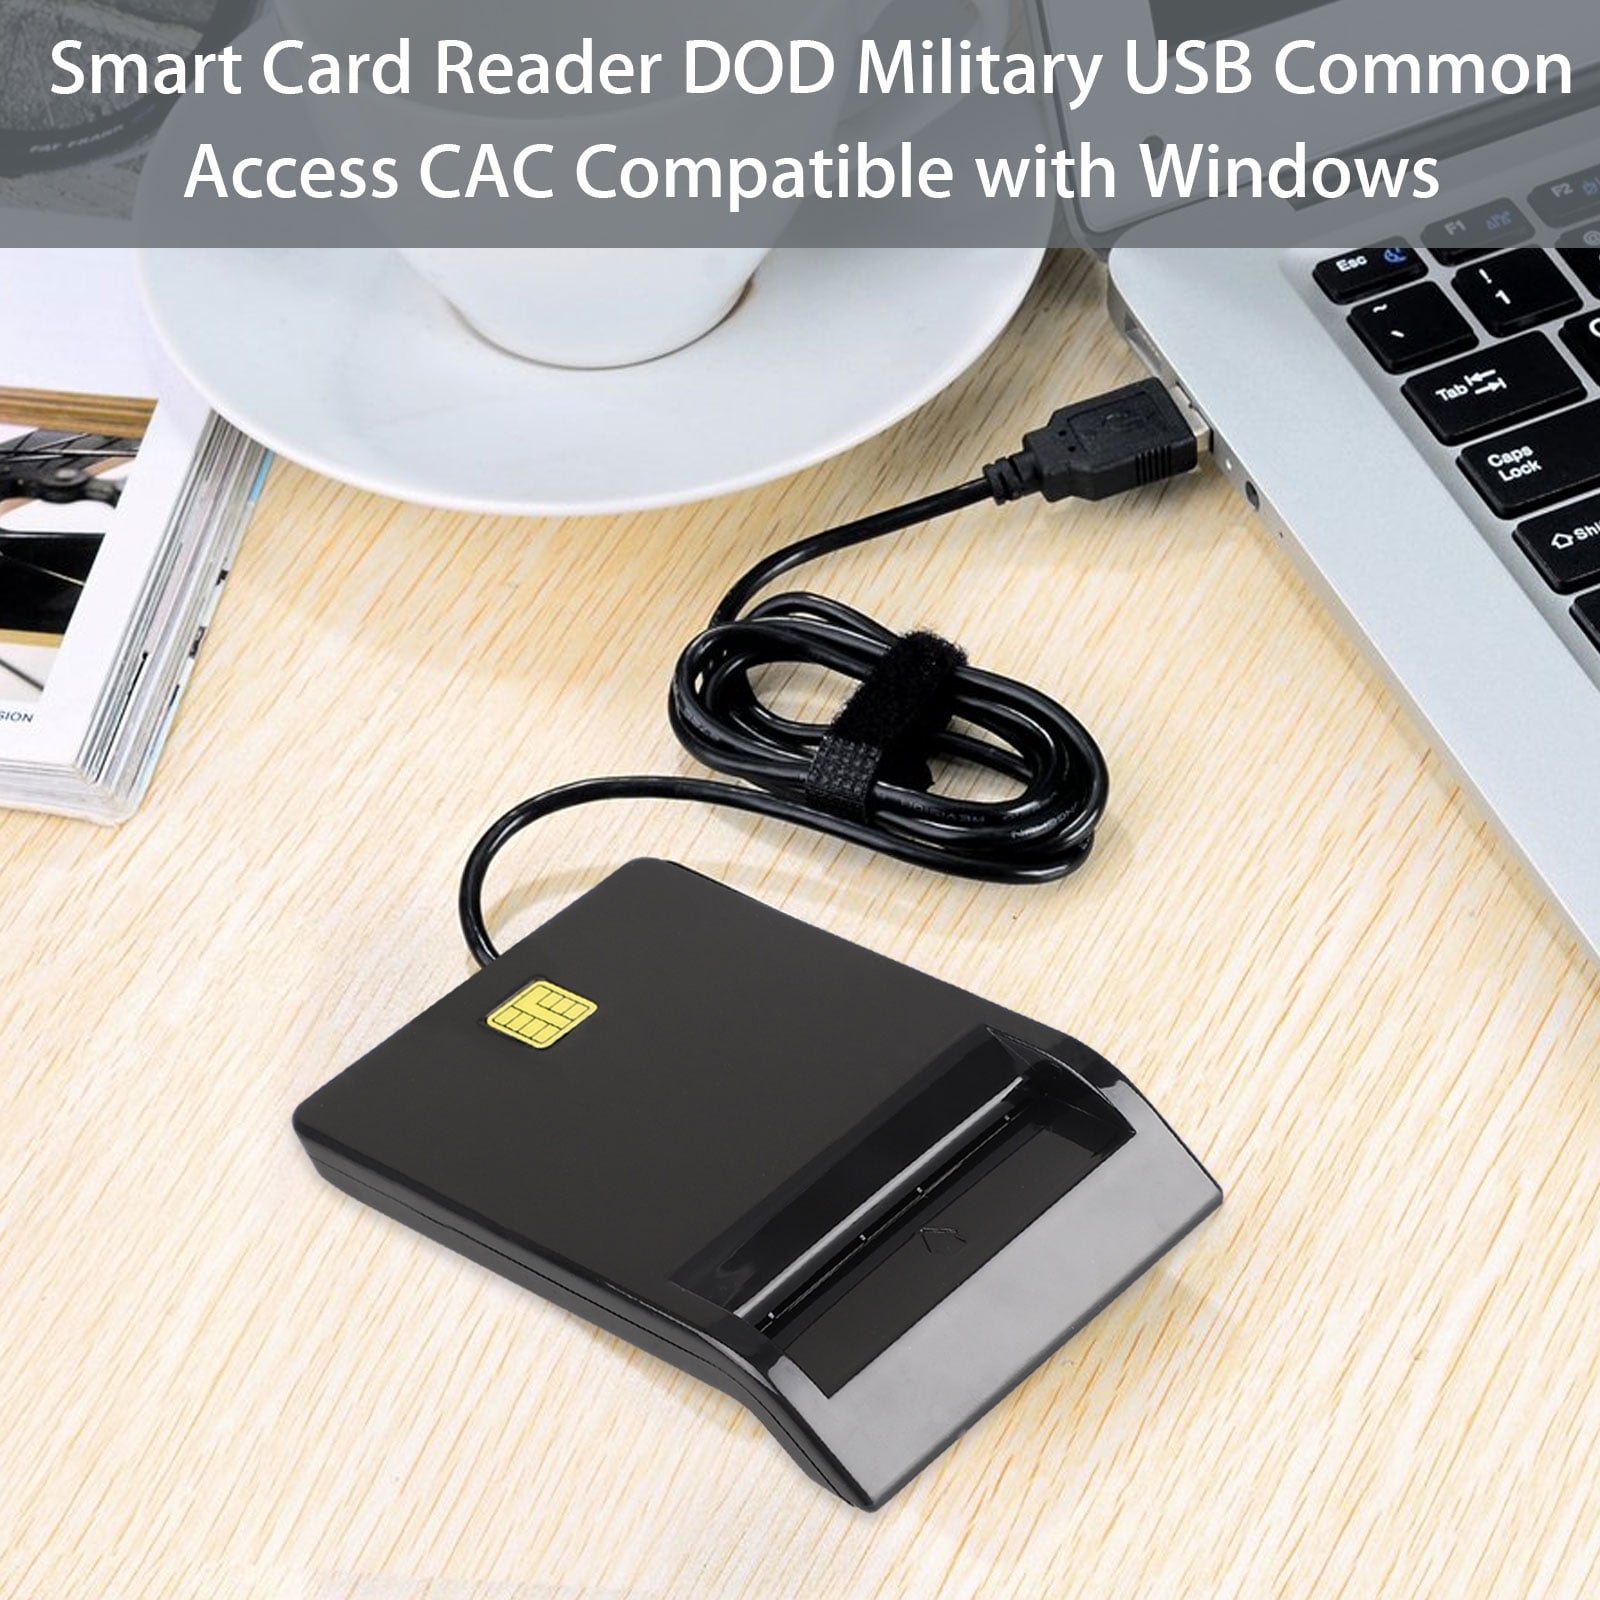 Eeekit Smart Card Reader Dod Military Usb Common Access Cac